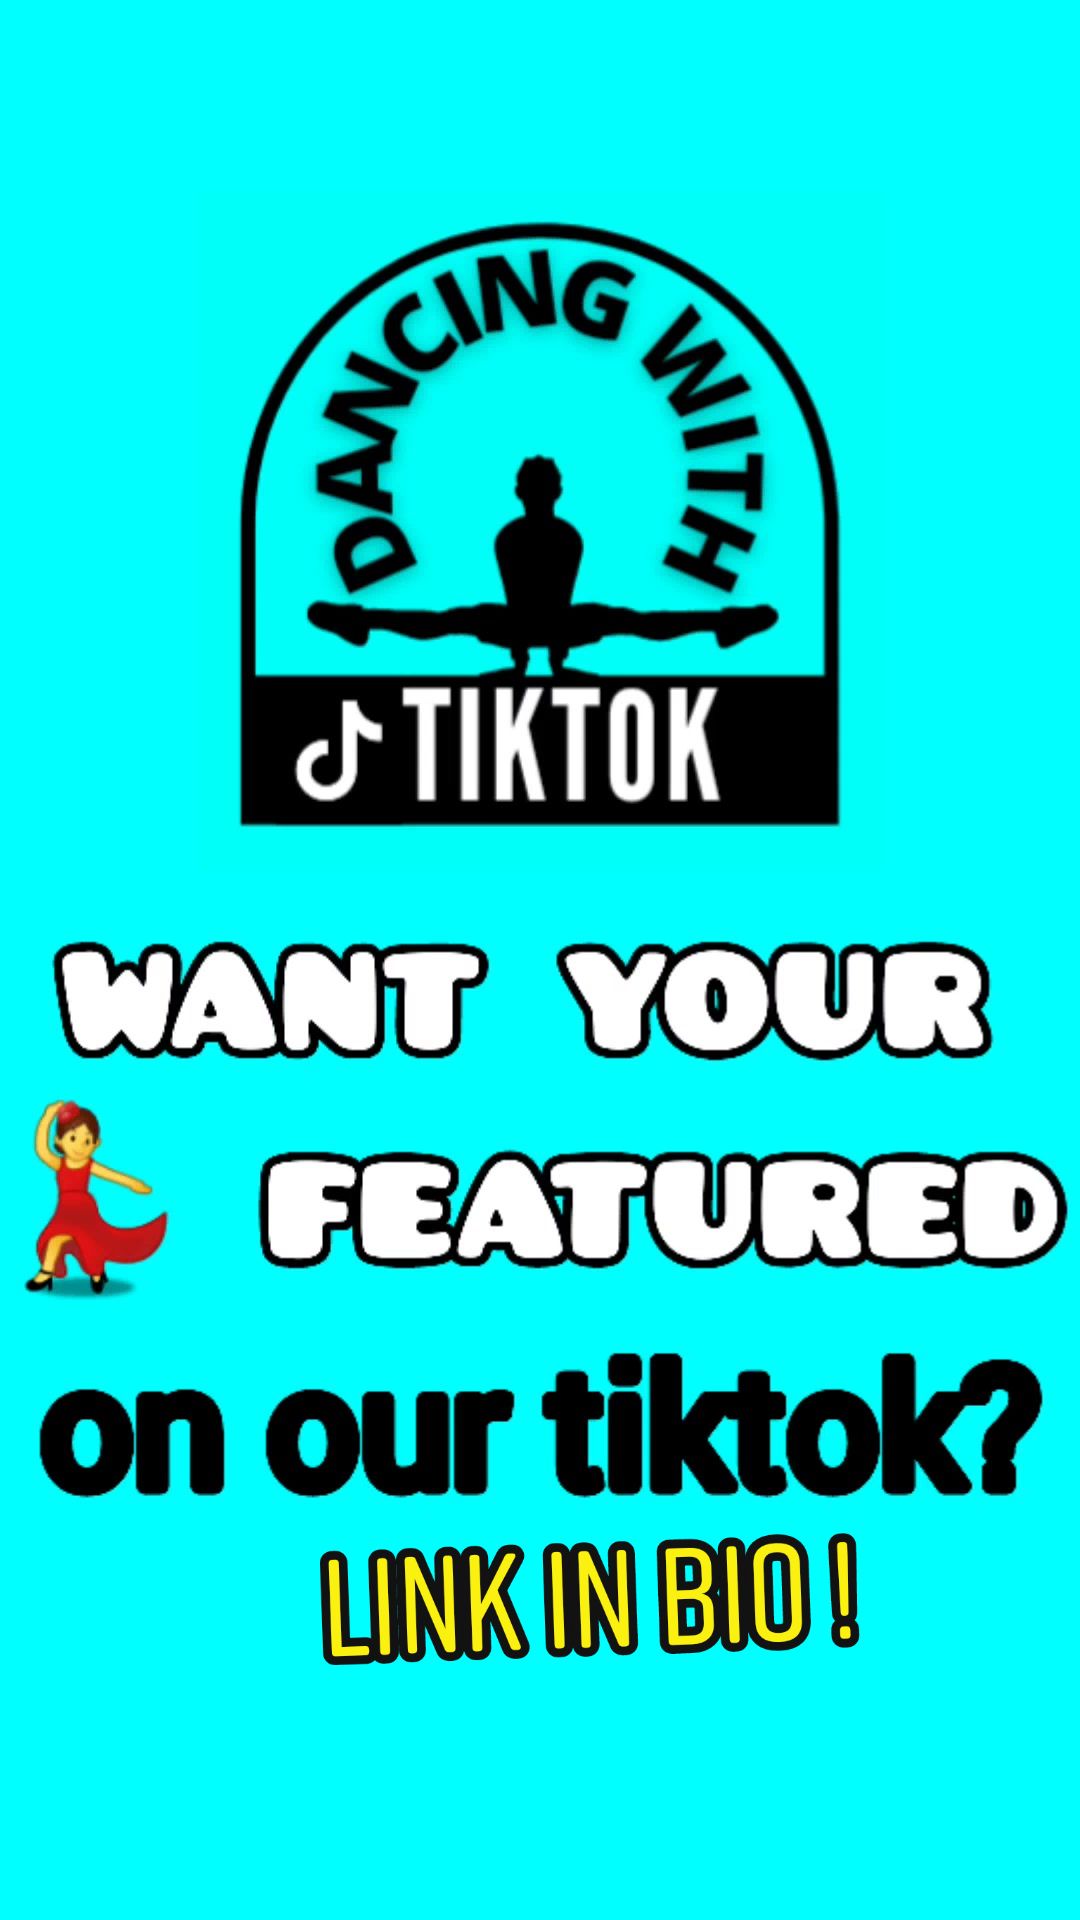 @Dancing With Tiktok